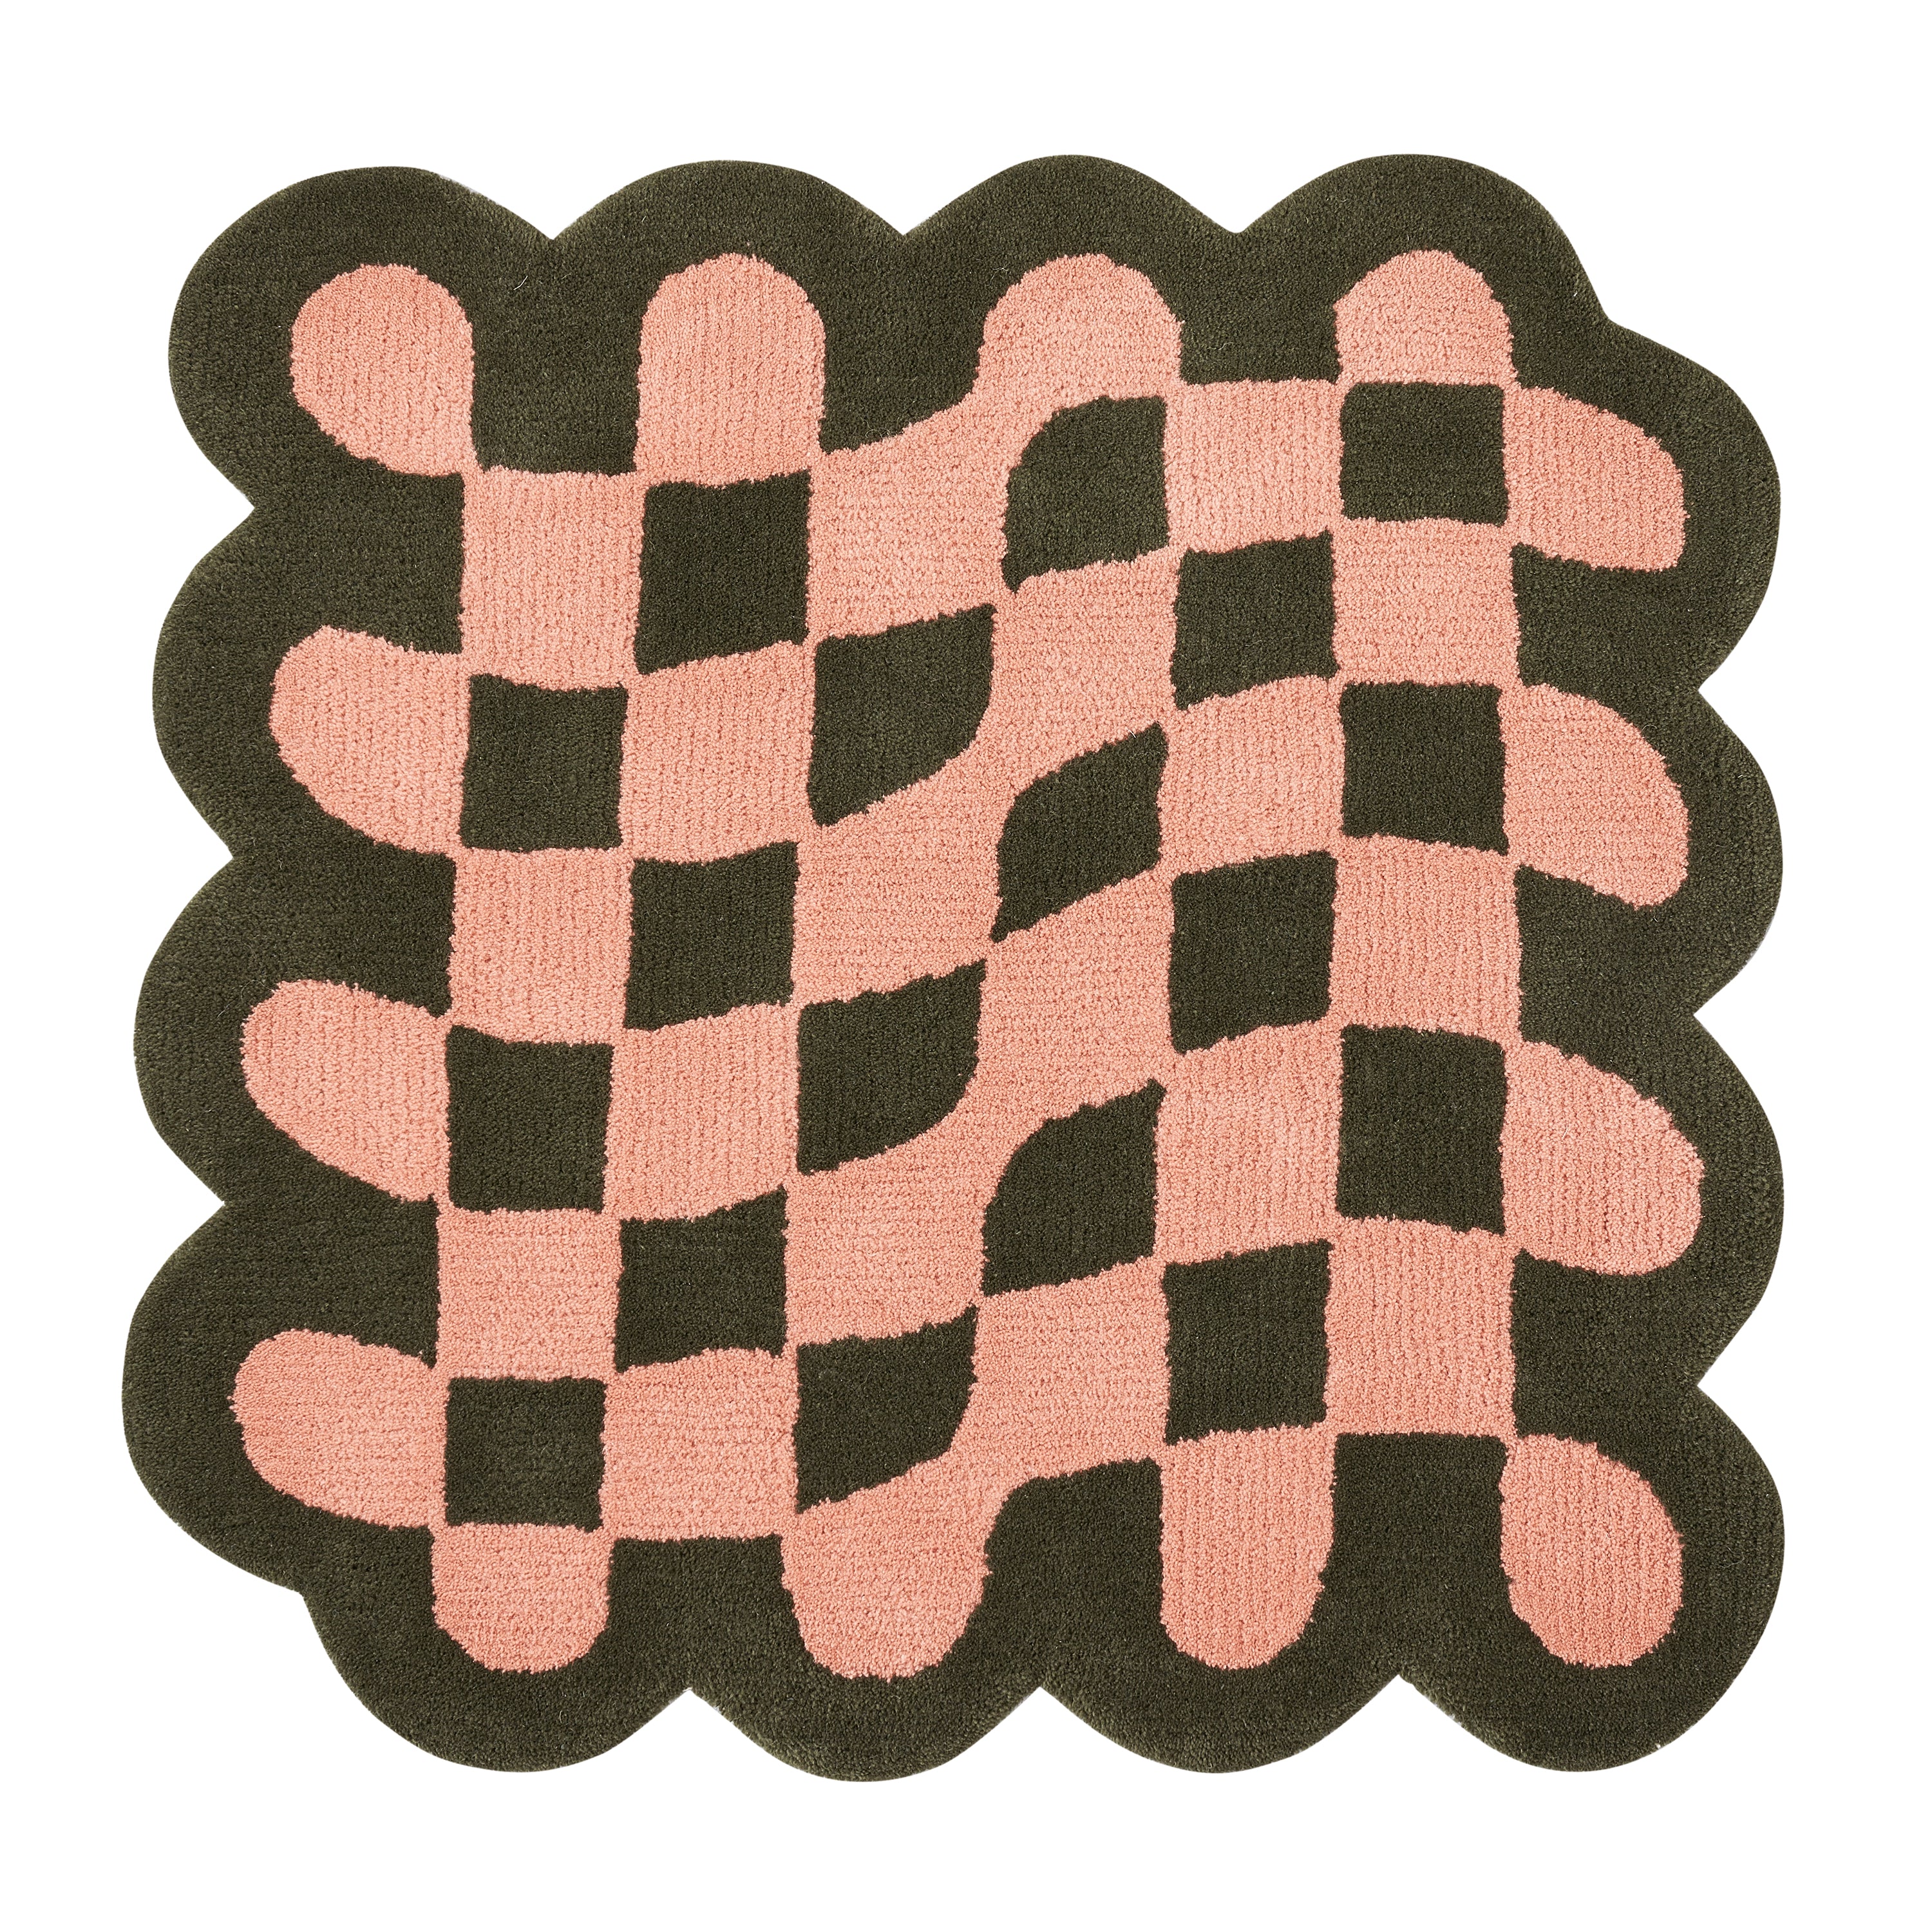 Wavy chess board rug - Congo pink x Matcha